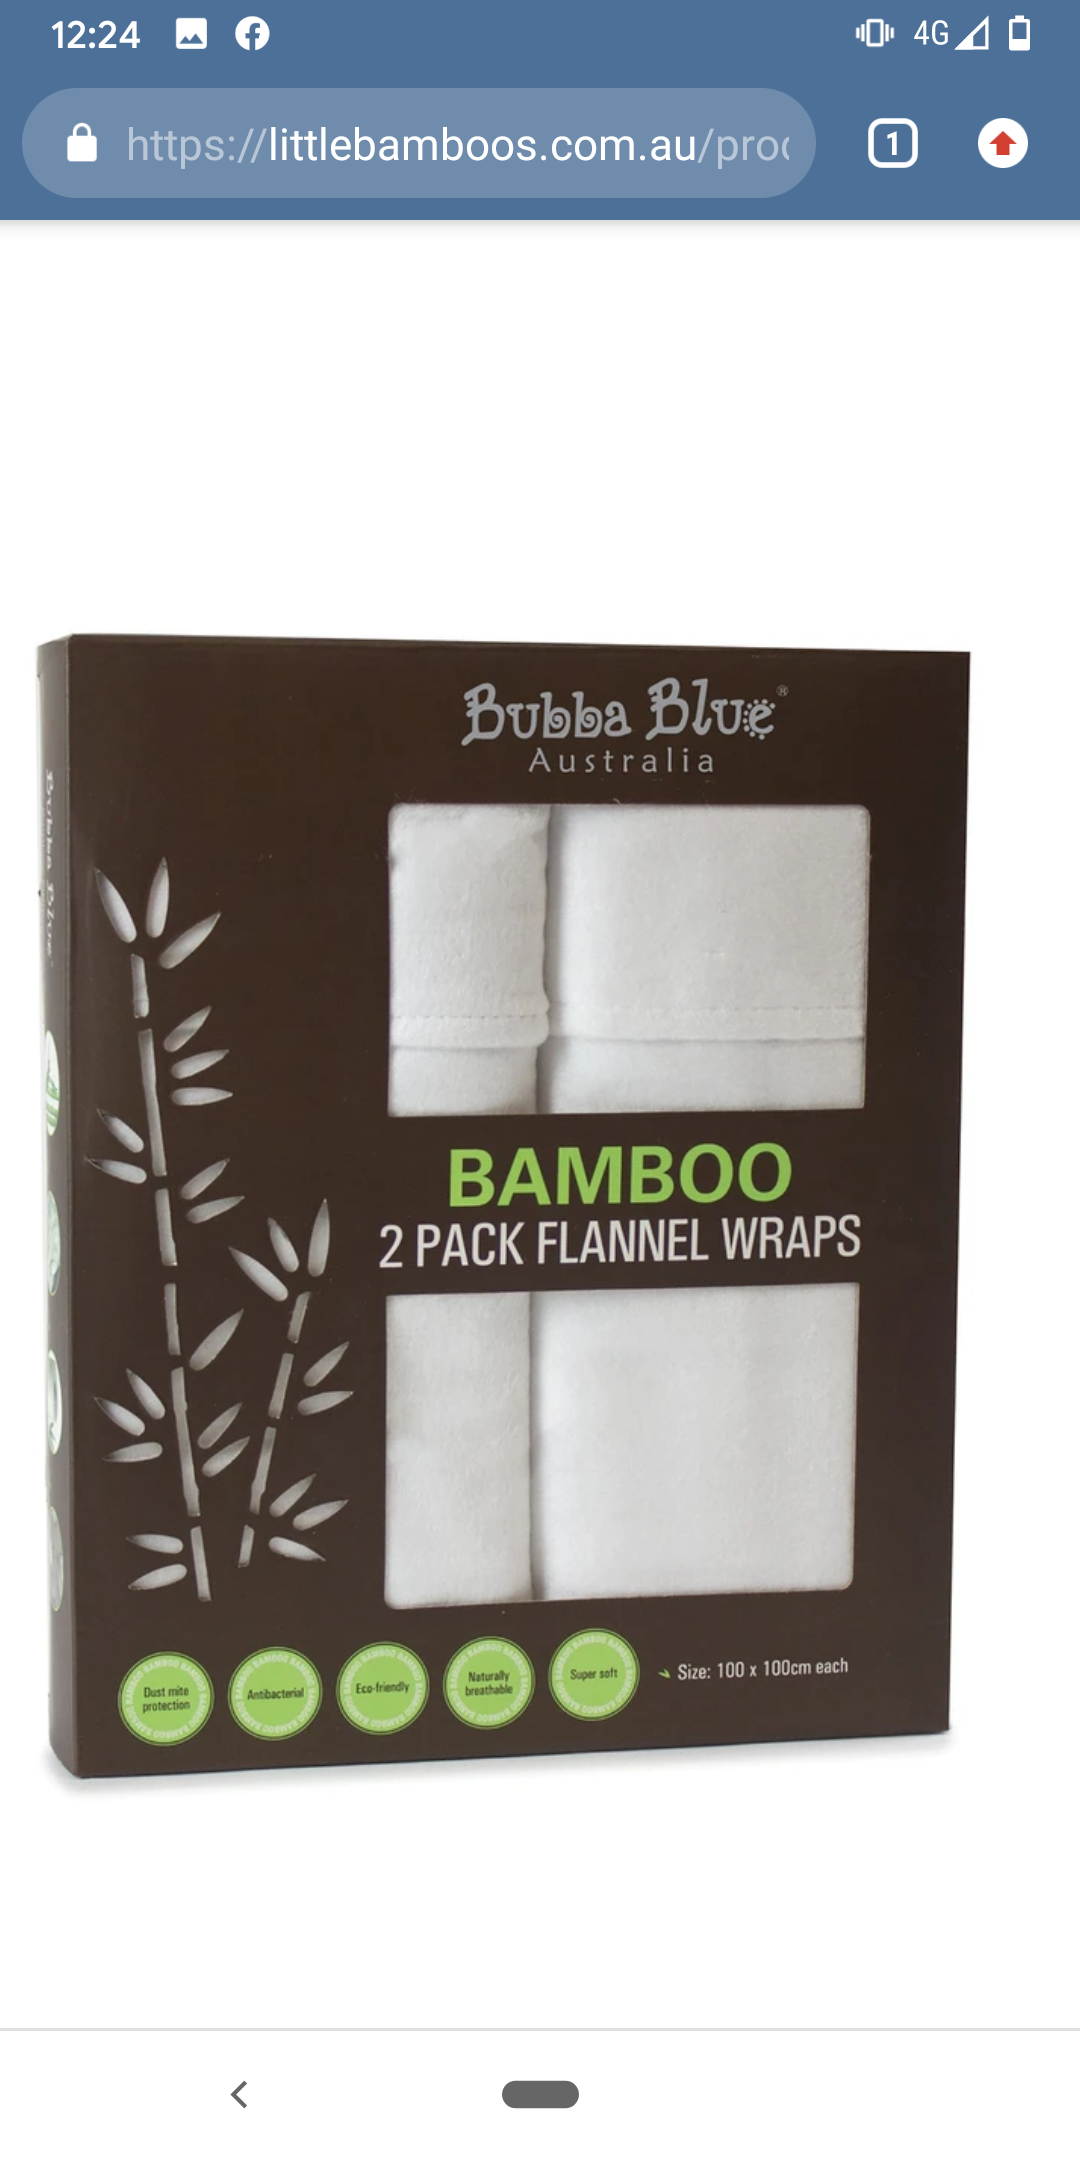 Bamboo baby wraps